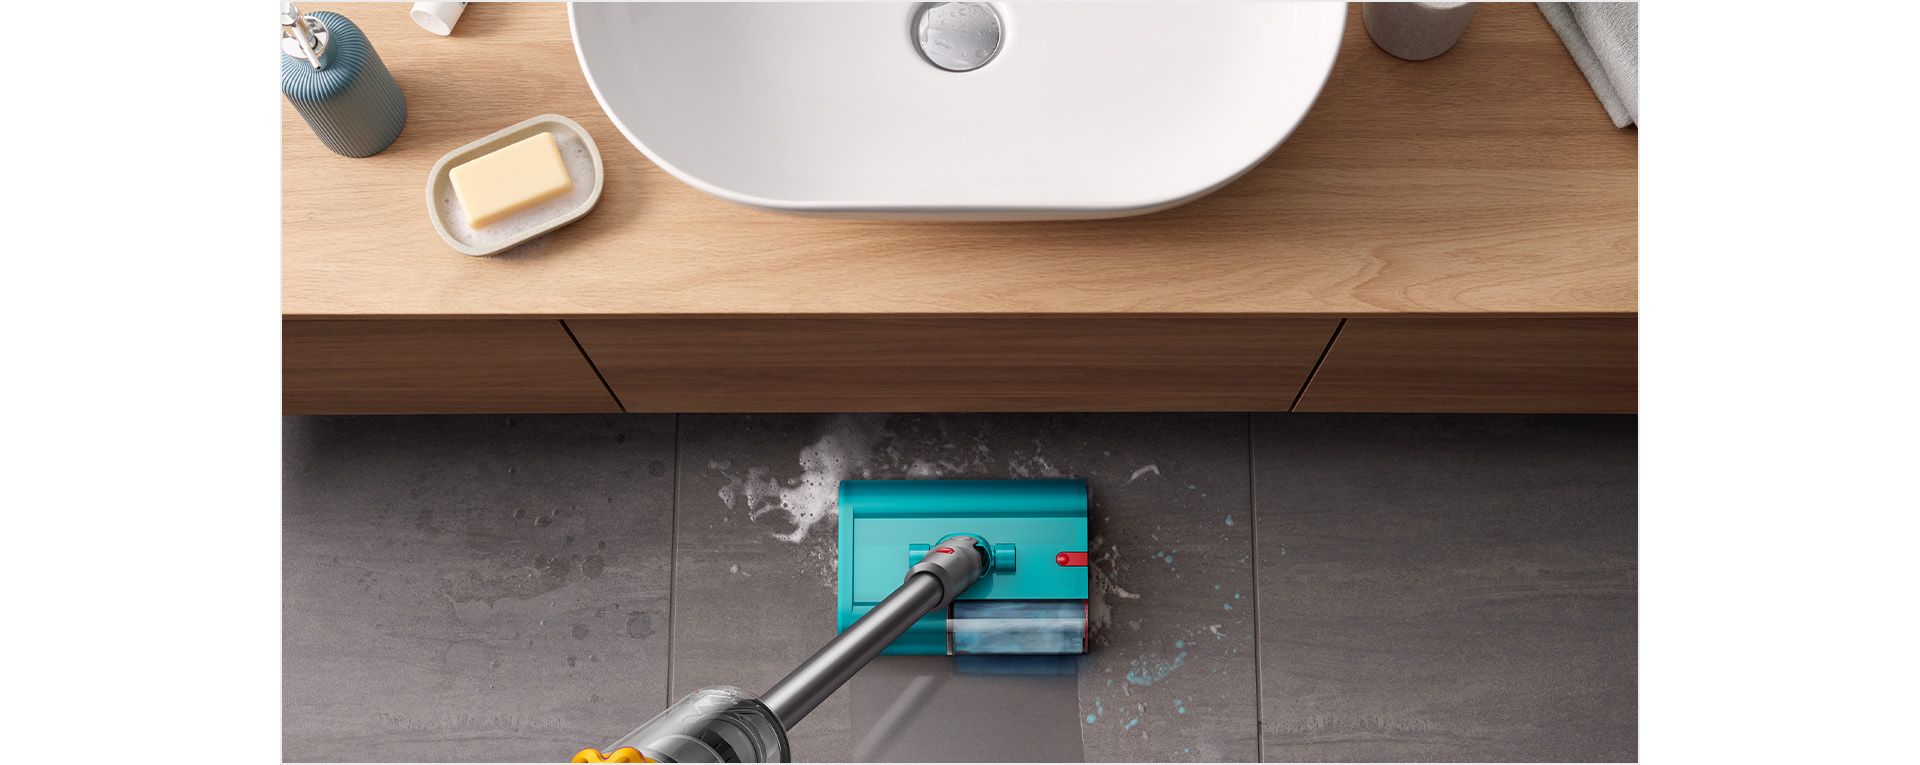 Dyson V15s Detect Submarine wet roller head cleaning a tiled bathroom floor.